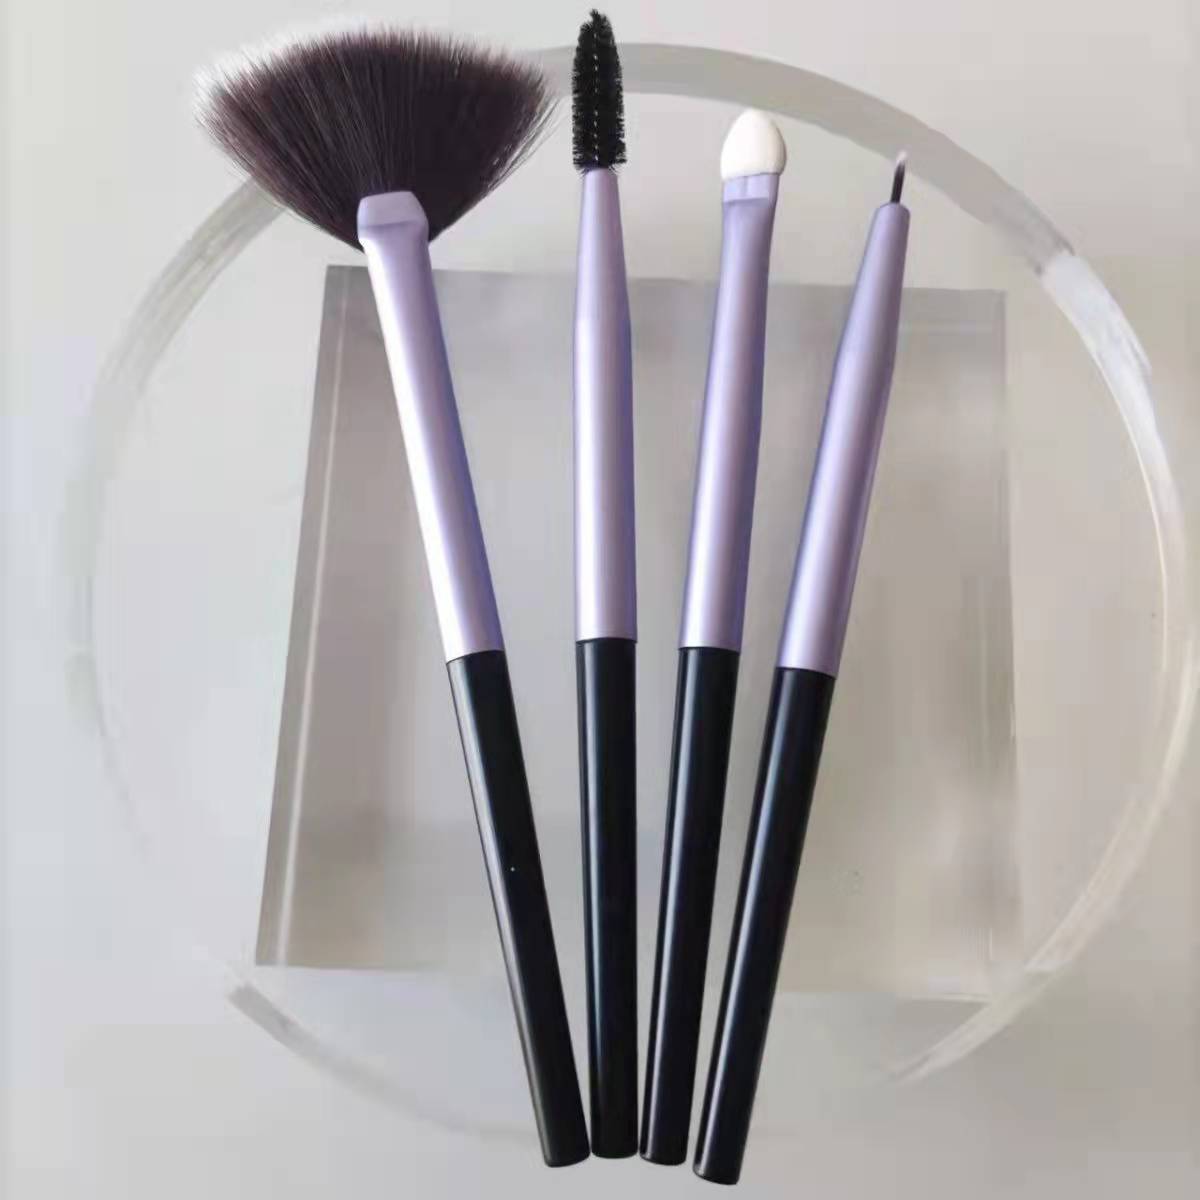 FLD Long Tube Makeup Brushes Travel Set Professional Natural Hair Powder Foundation Eyeshadow Contour Eyebrow Cosmetic Brush Kit